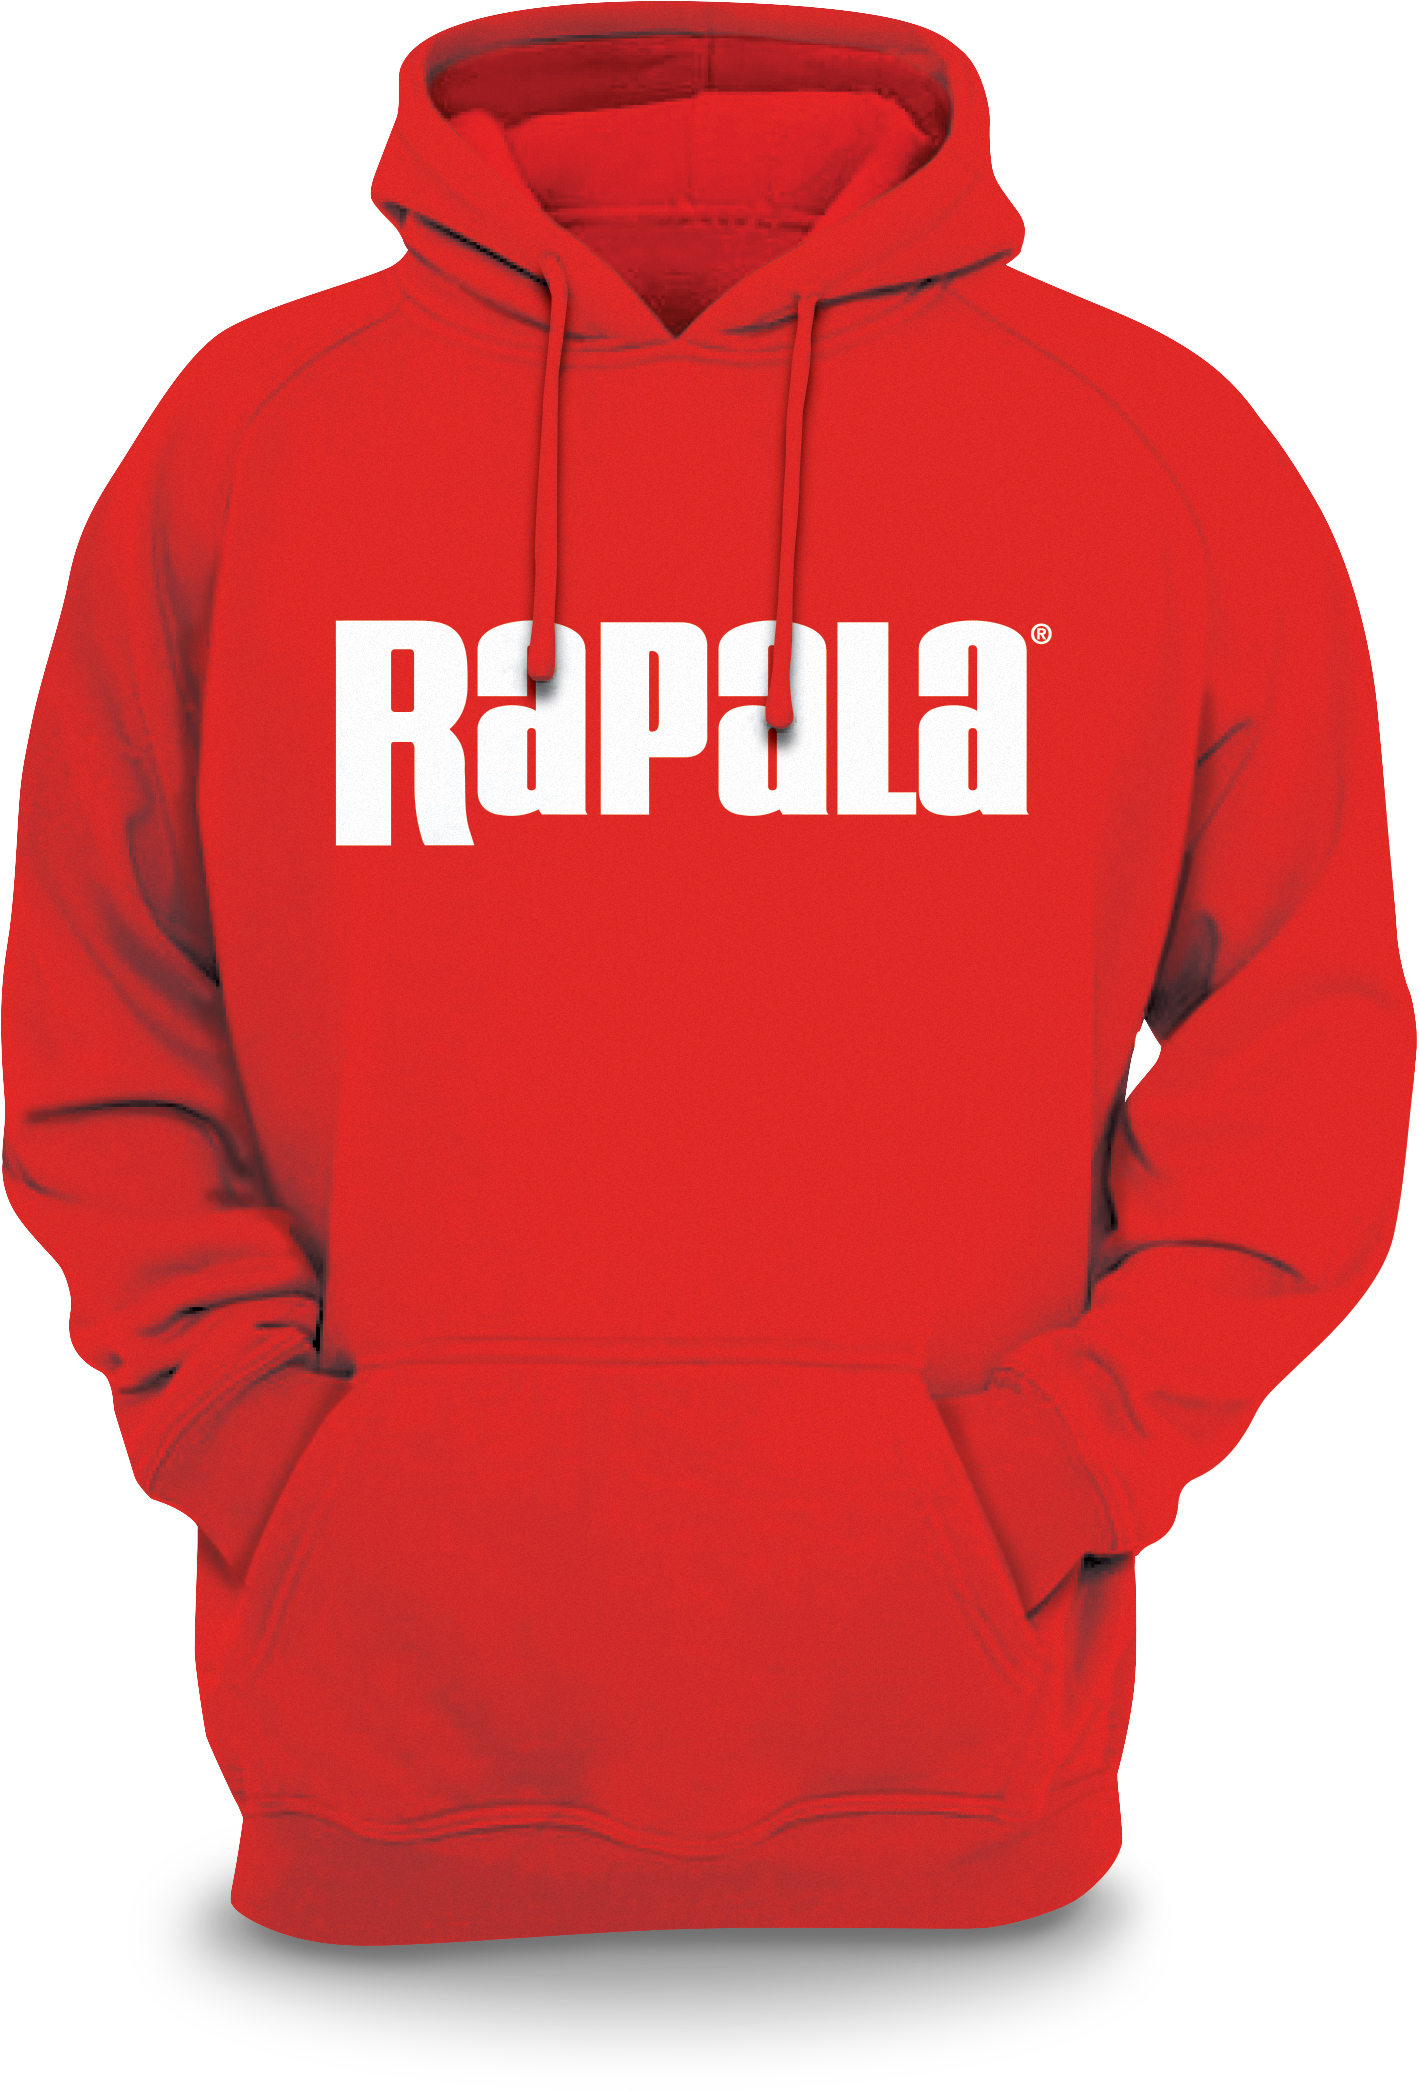 https://mcproductimages.s3-us-west-2.amazonaws.com/rapala/rapala-hooded-sweatshirt/RSH05_Red_White_Sweatshirt.jpg